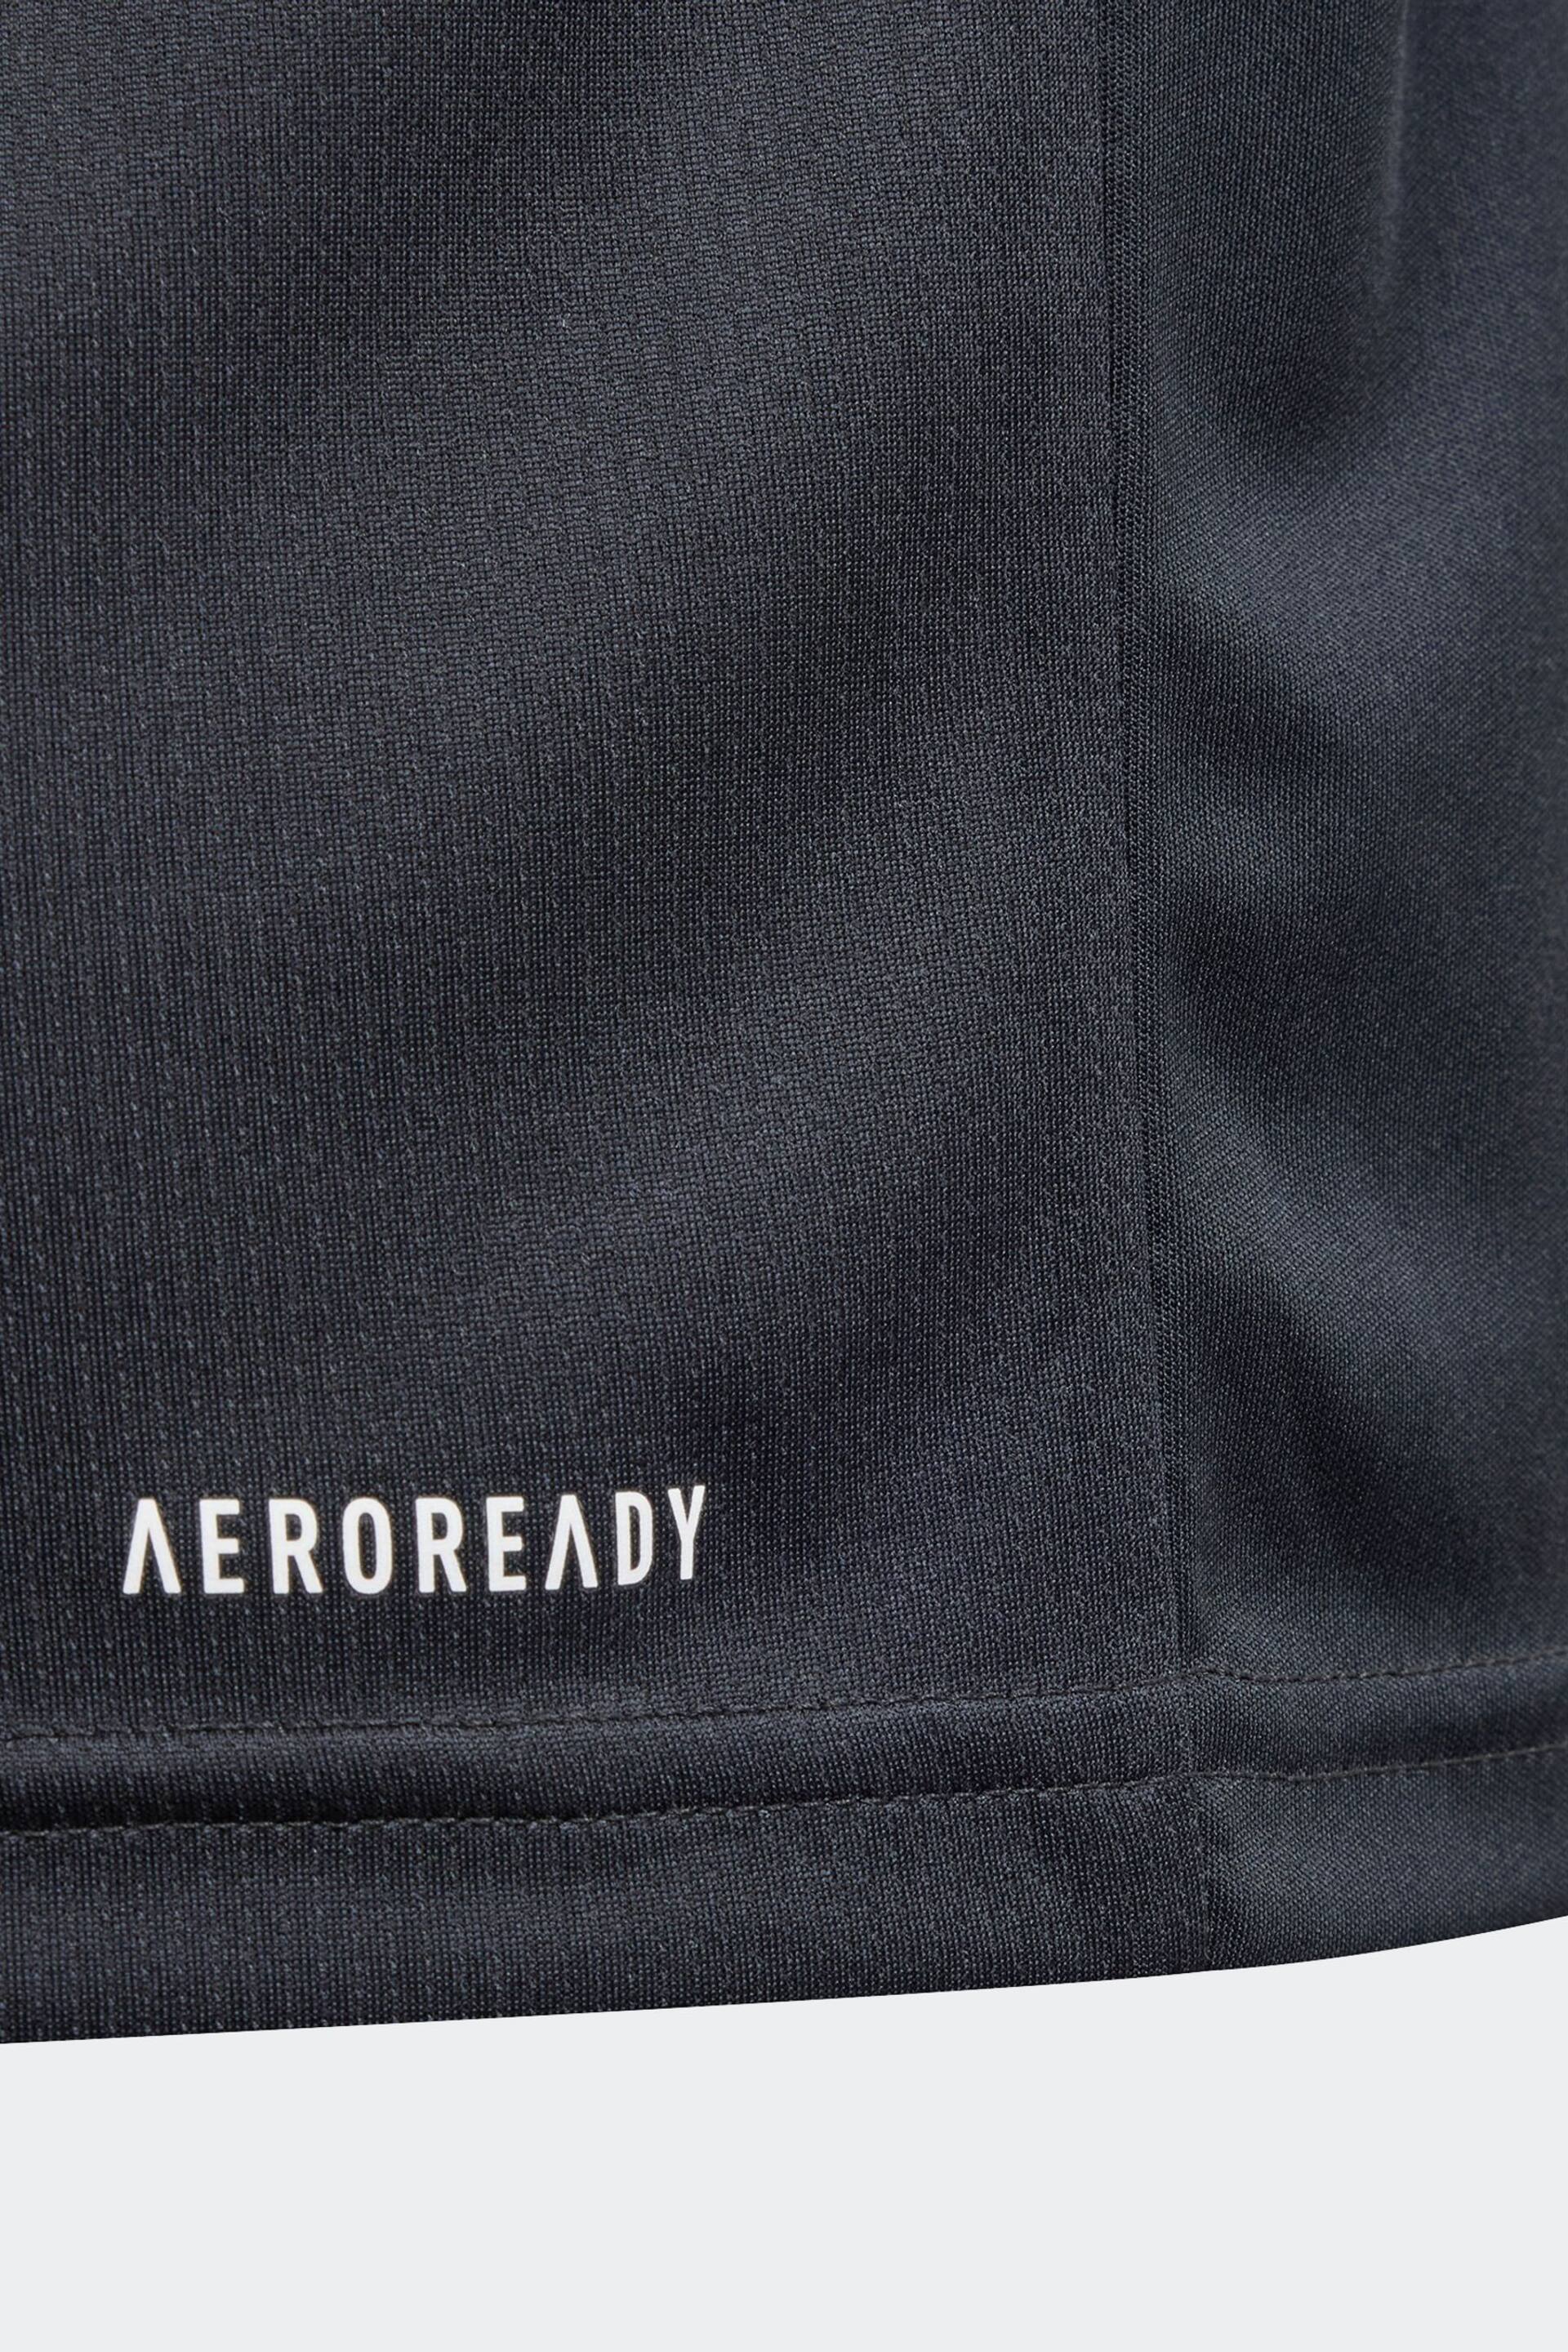 adidas Black Regular Fit Sportswear Train Essentials Aeroready Logo T-Shirt - Image 9 of 9